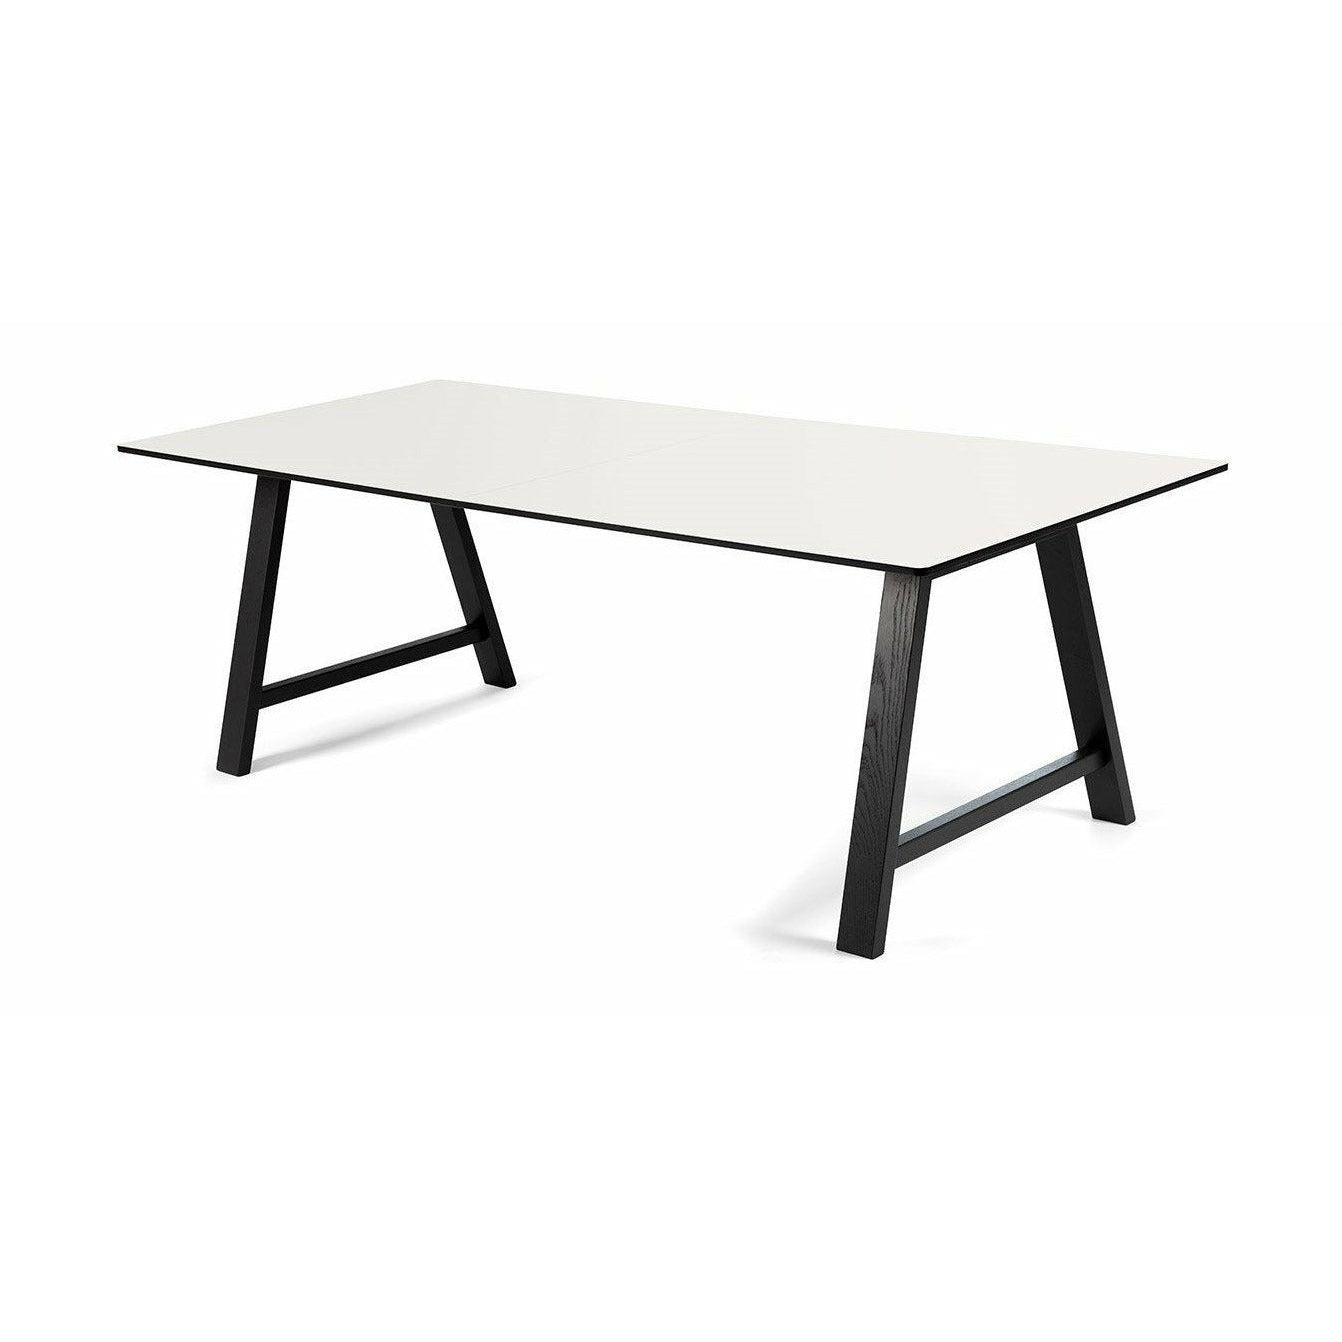 Andersen Furniture T1 utdragbar tabell, vit laminat, svart ram, 180 cm